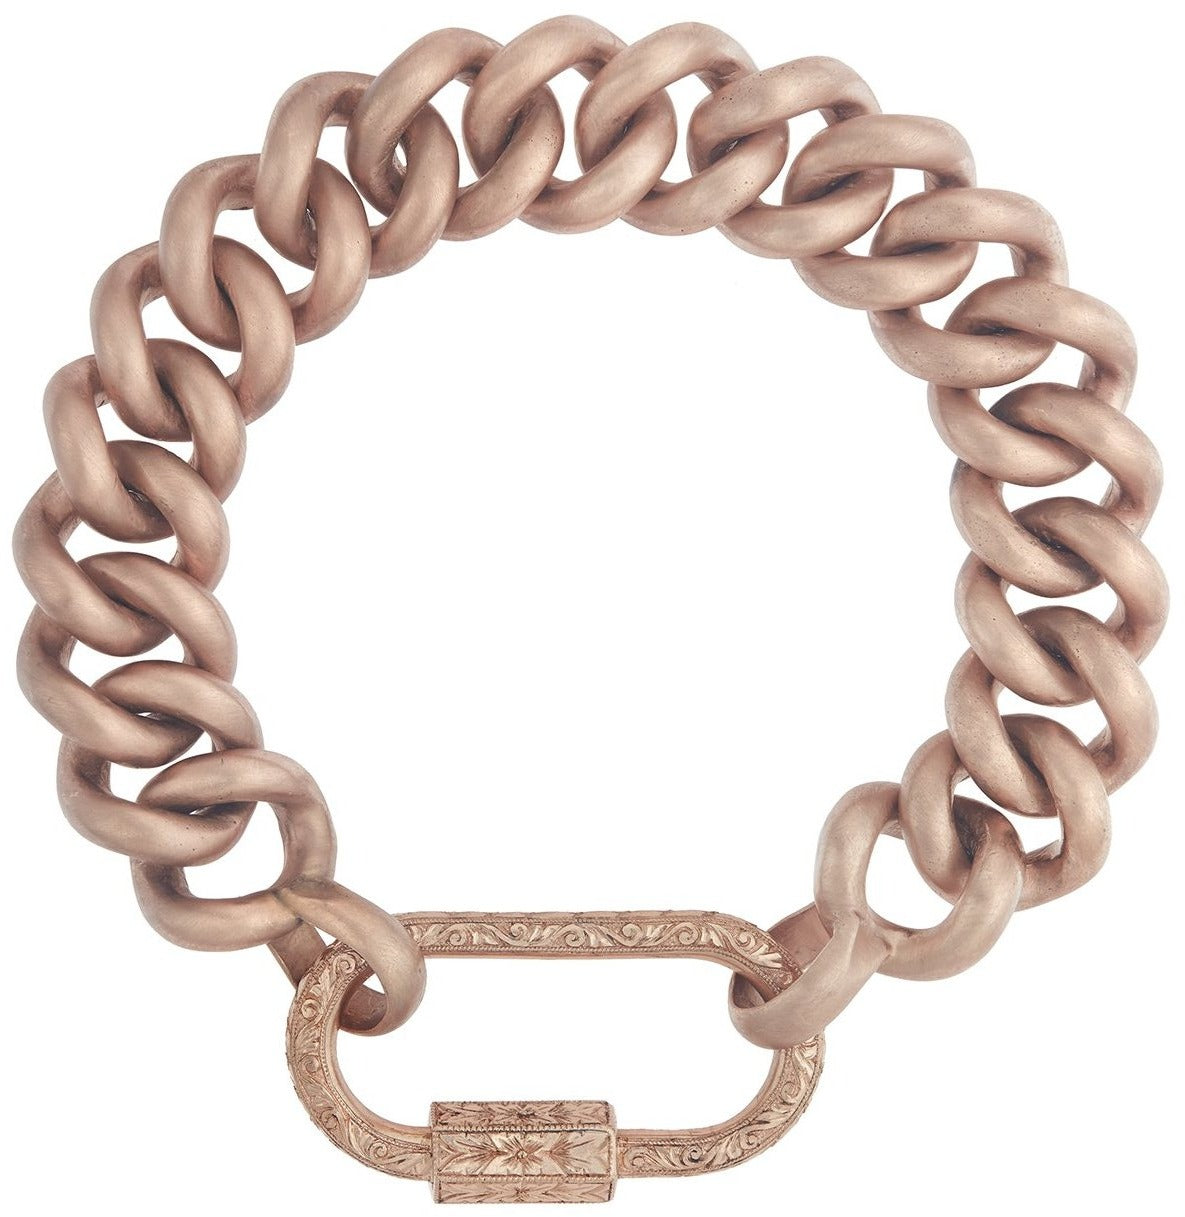 Monogrammed Lock Chain Necklace